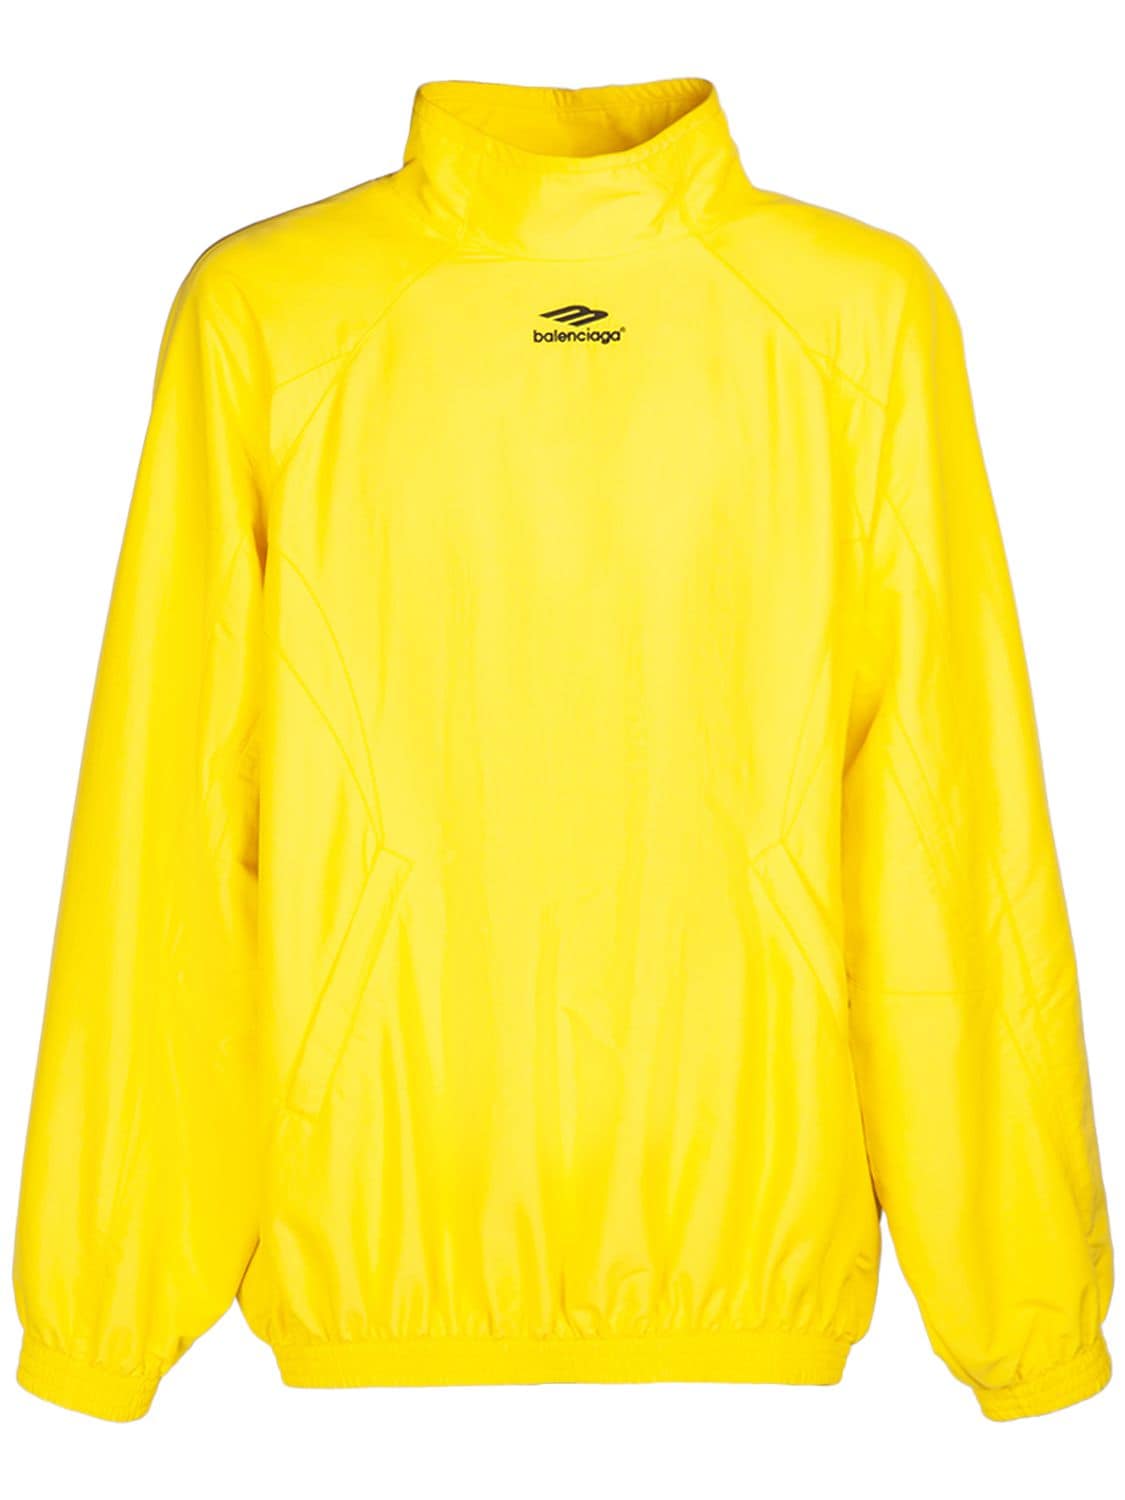 Tracksuit jacket Balenciaga Yellow size 40 UK - US in Polyester